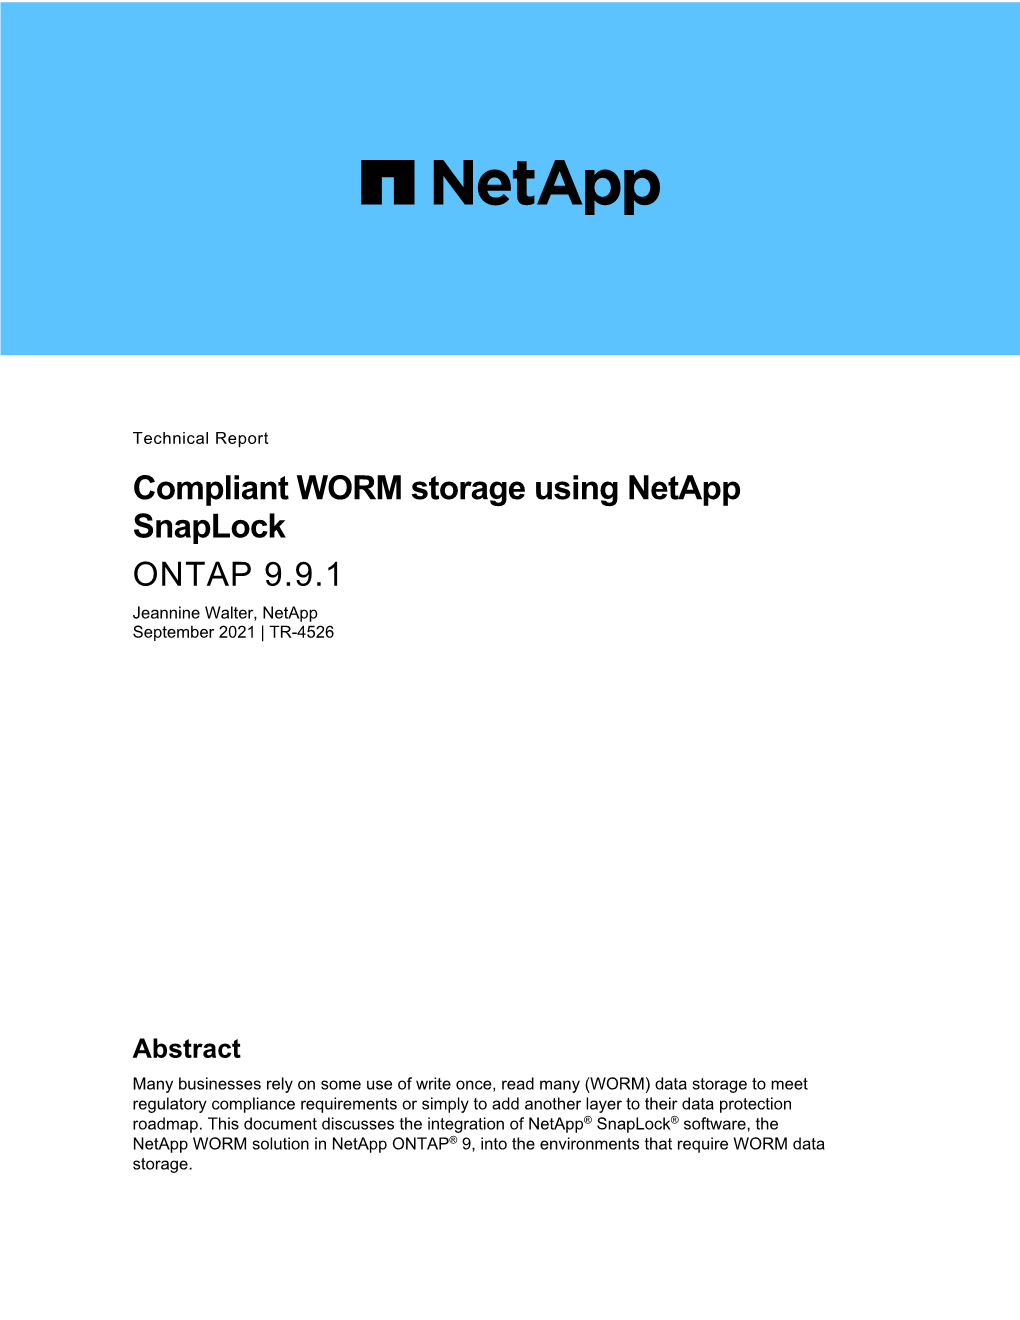 TR-4526: Compliant WORM Storage Using Netapp Snaplock